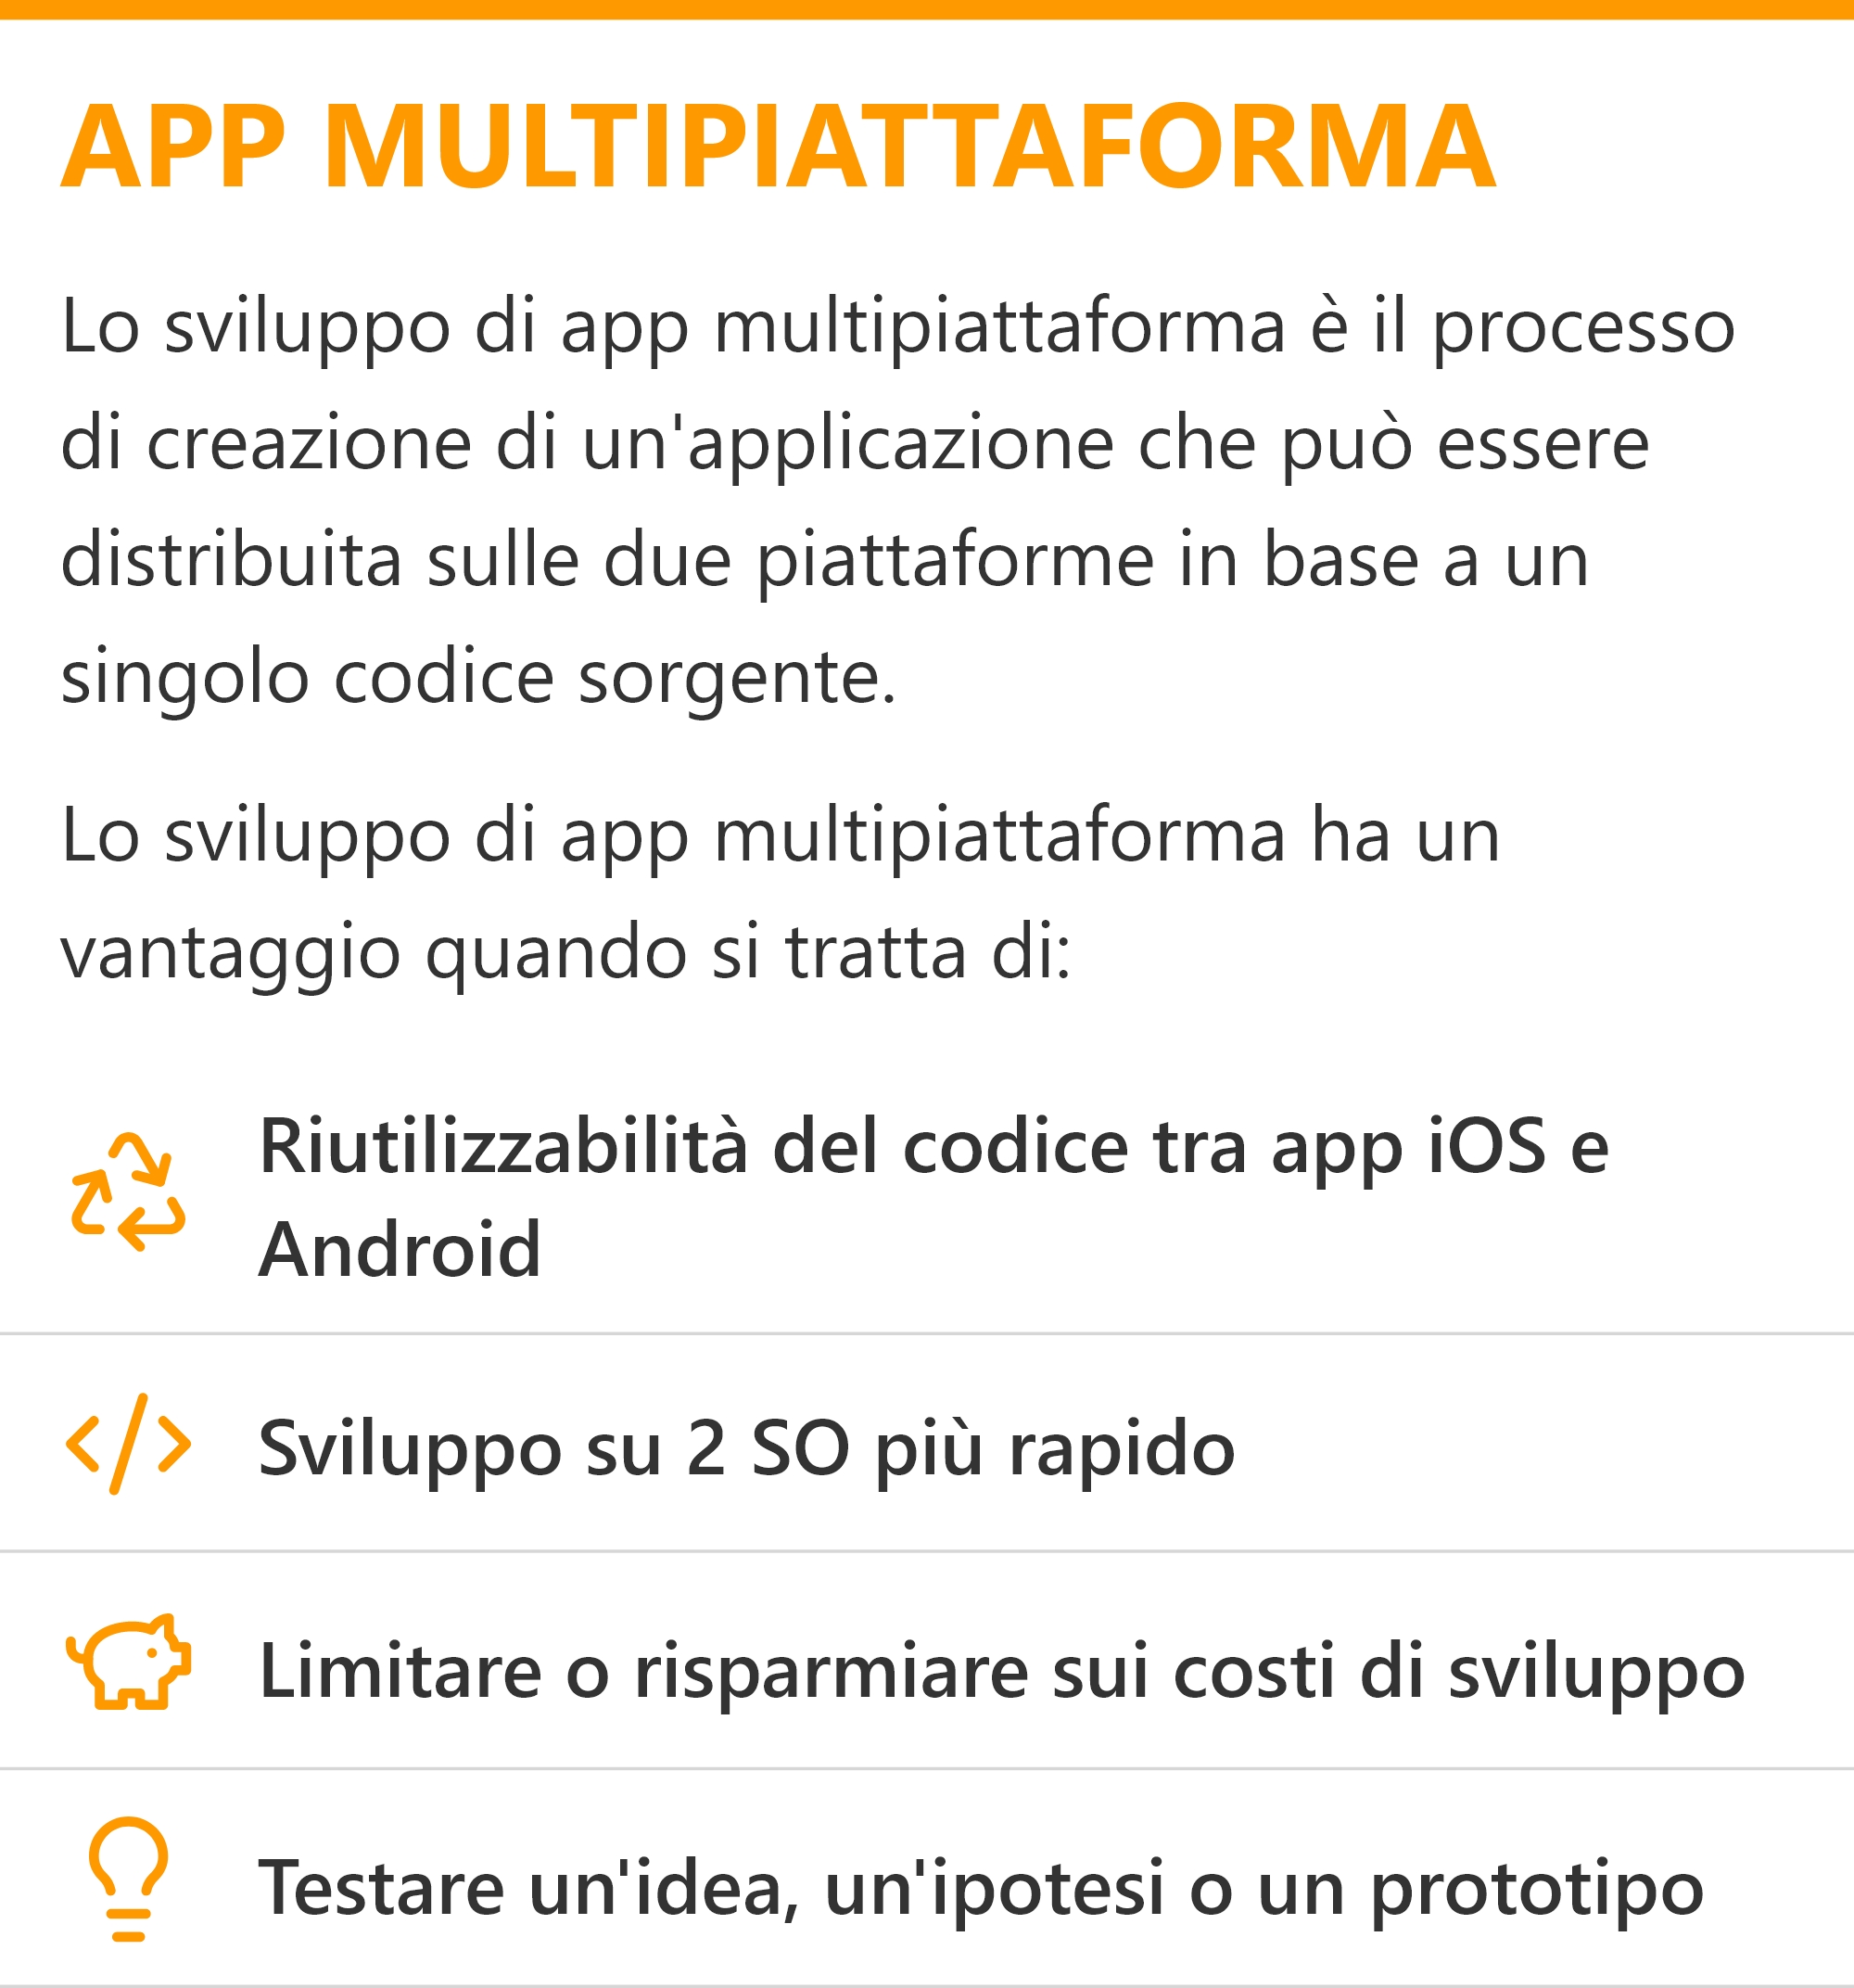 App Multipiattaforma